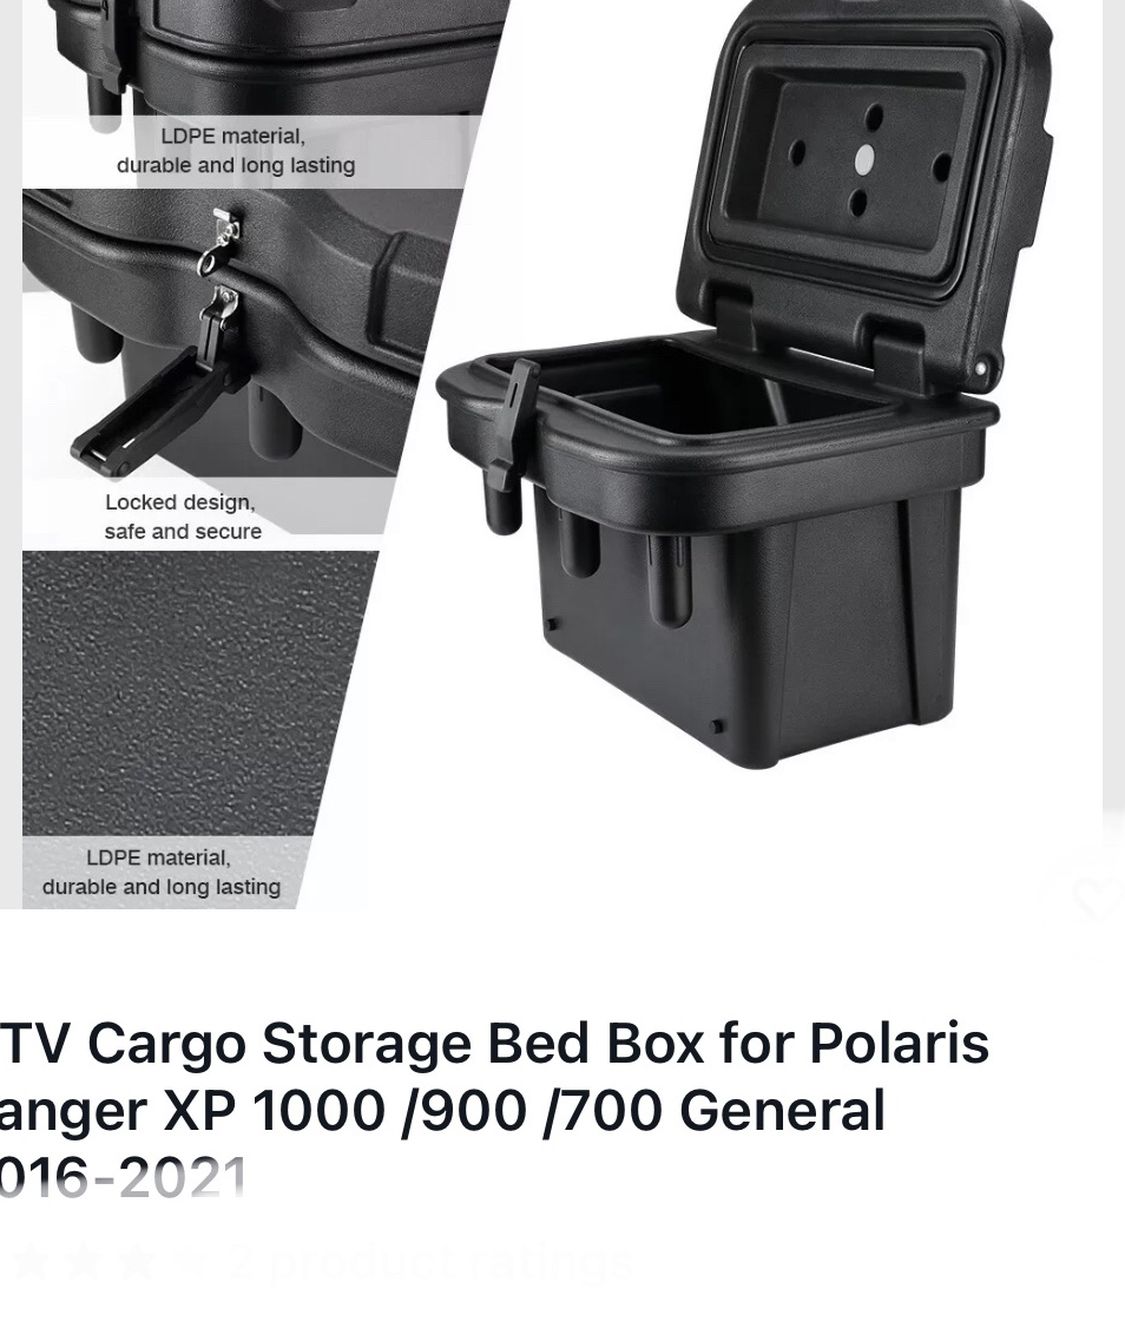 UTV Cargo Storage Bed Box for Polaris Ranger XP 1000 /900 /700 General 2016-2021